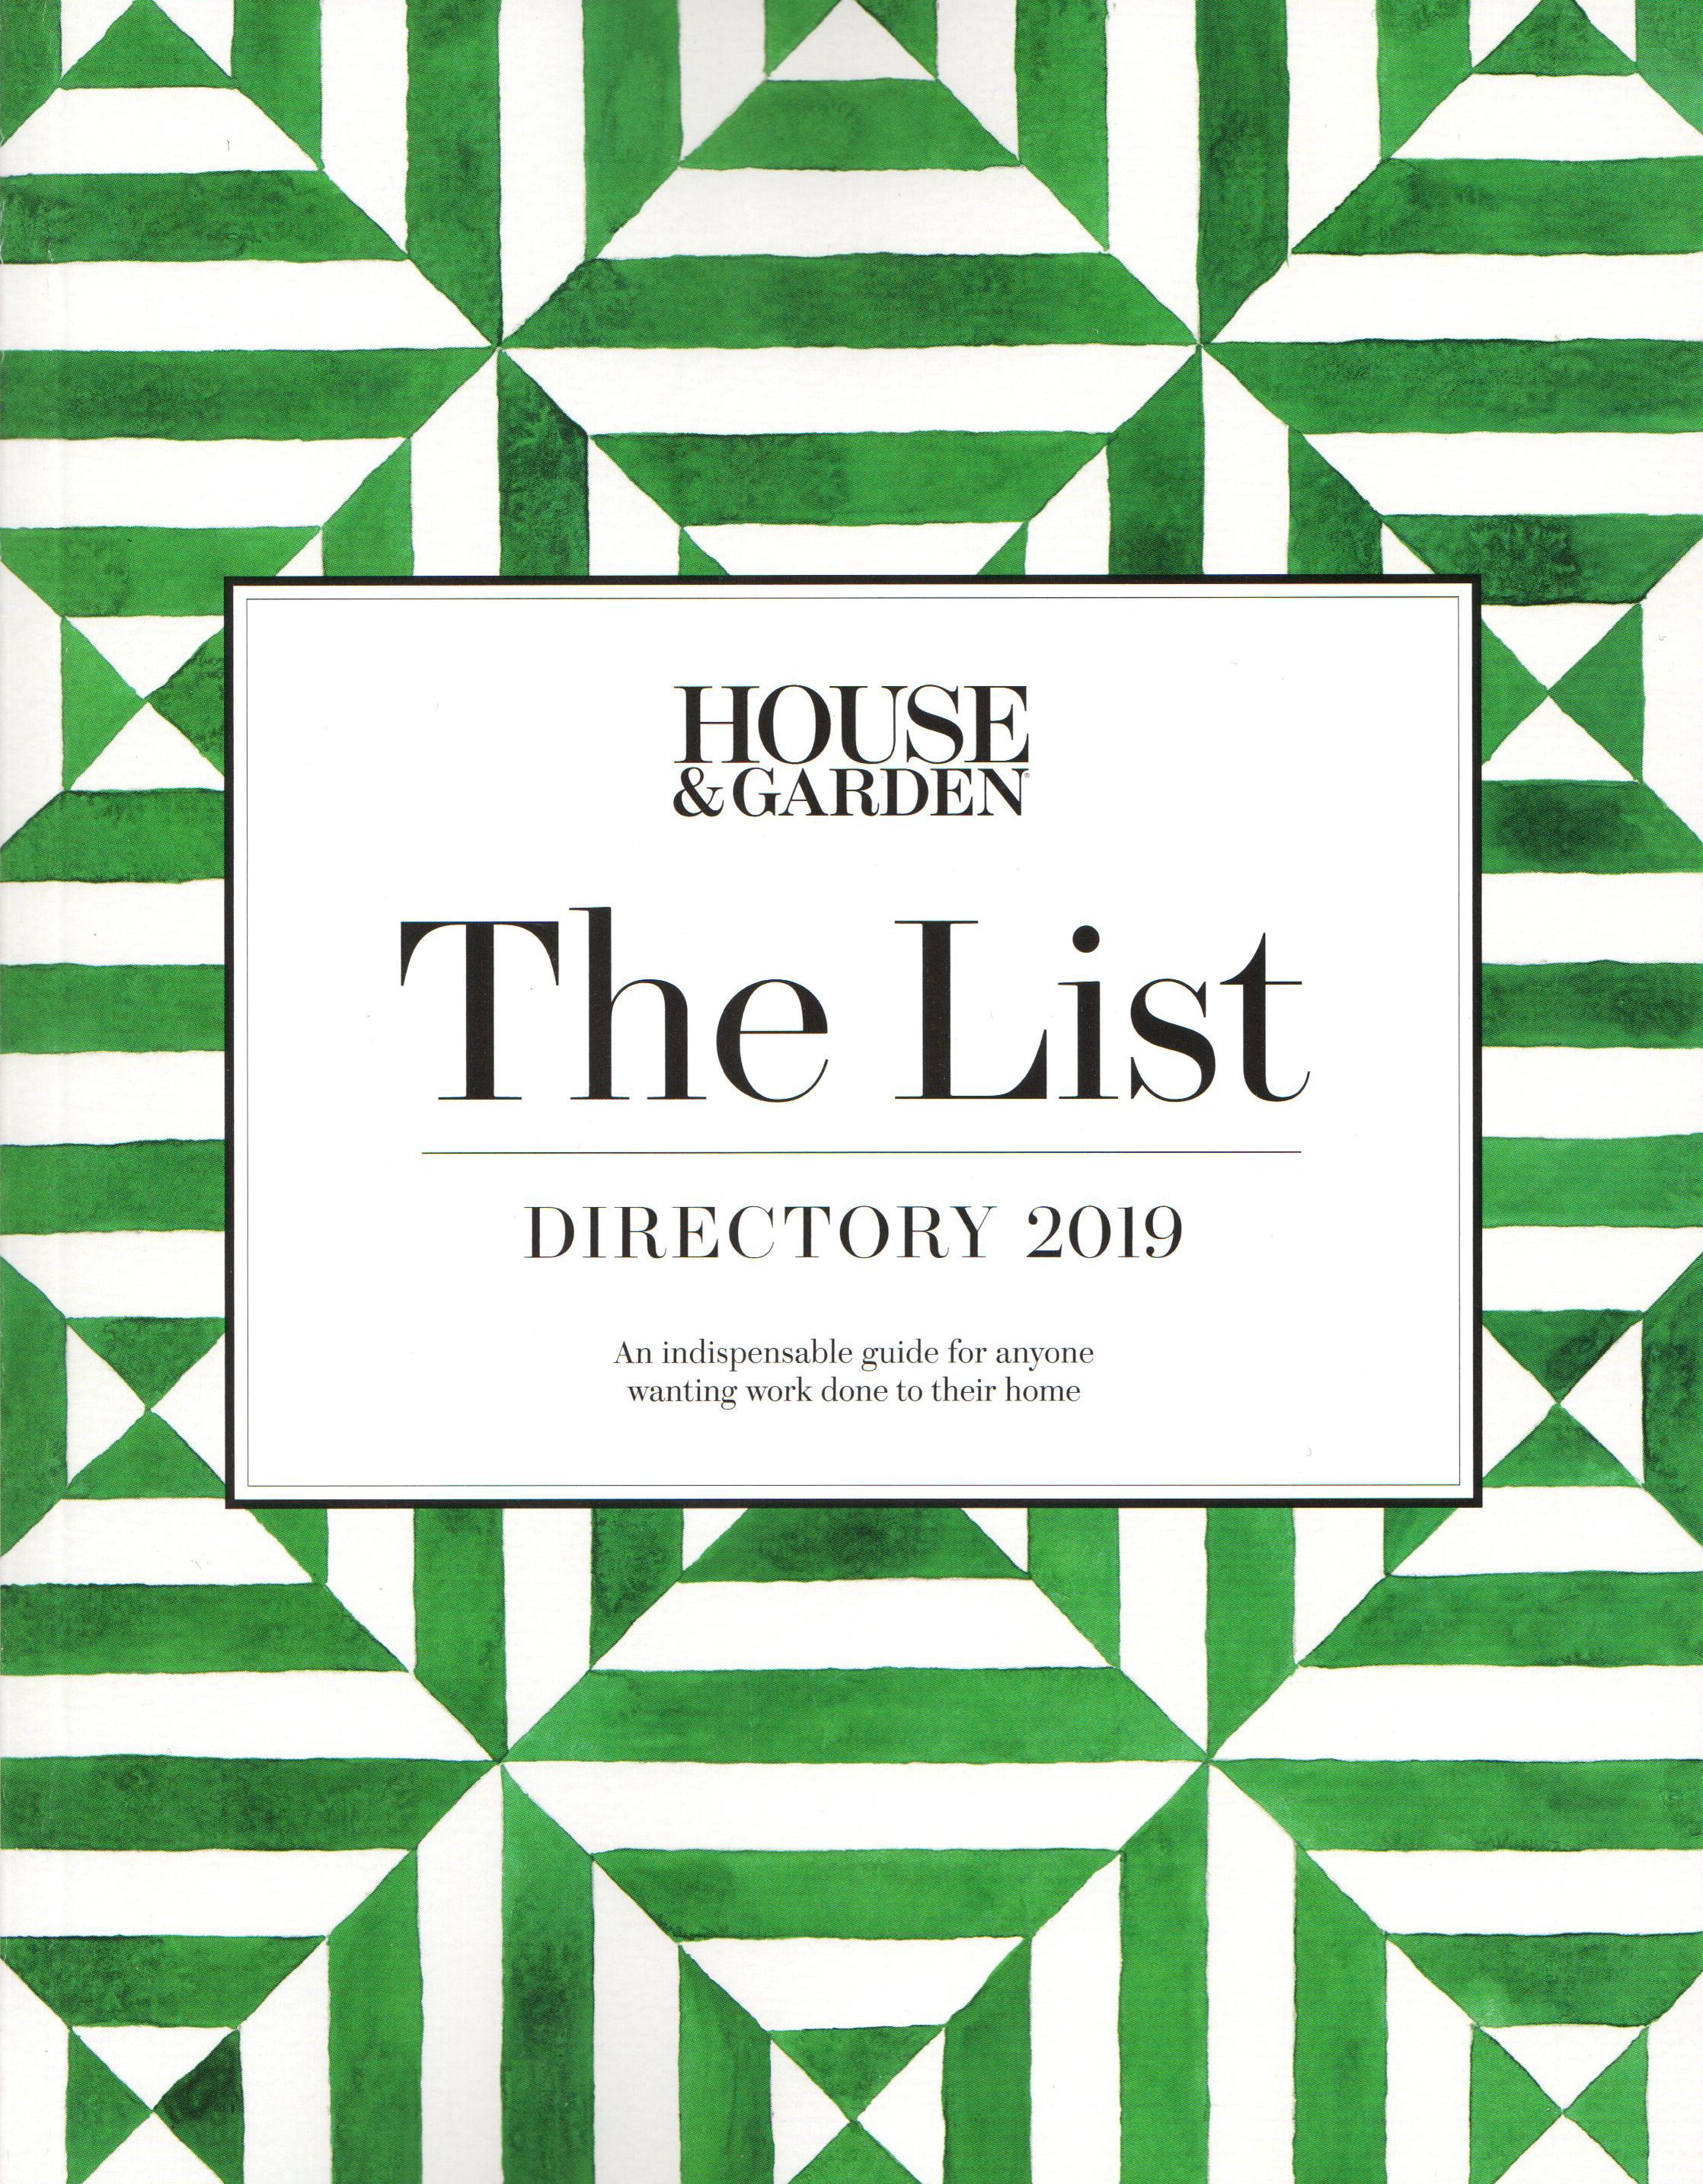 House & Garden 2019 Directory 'The List'